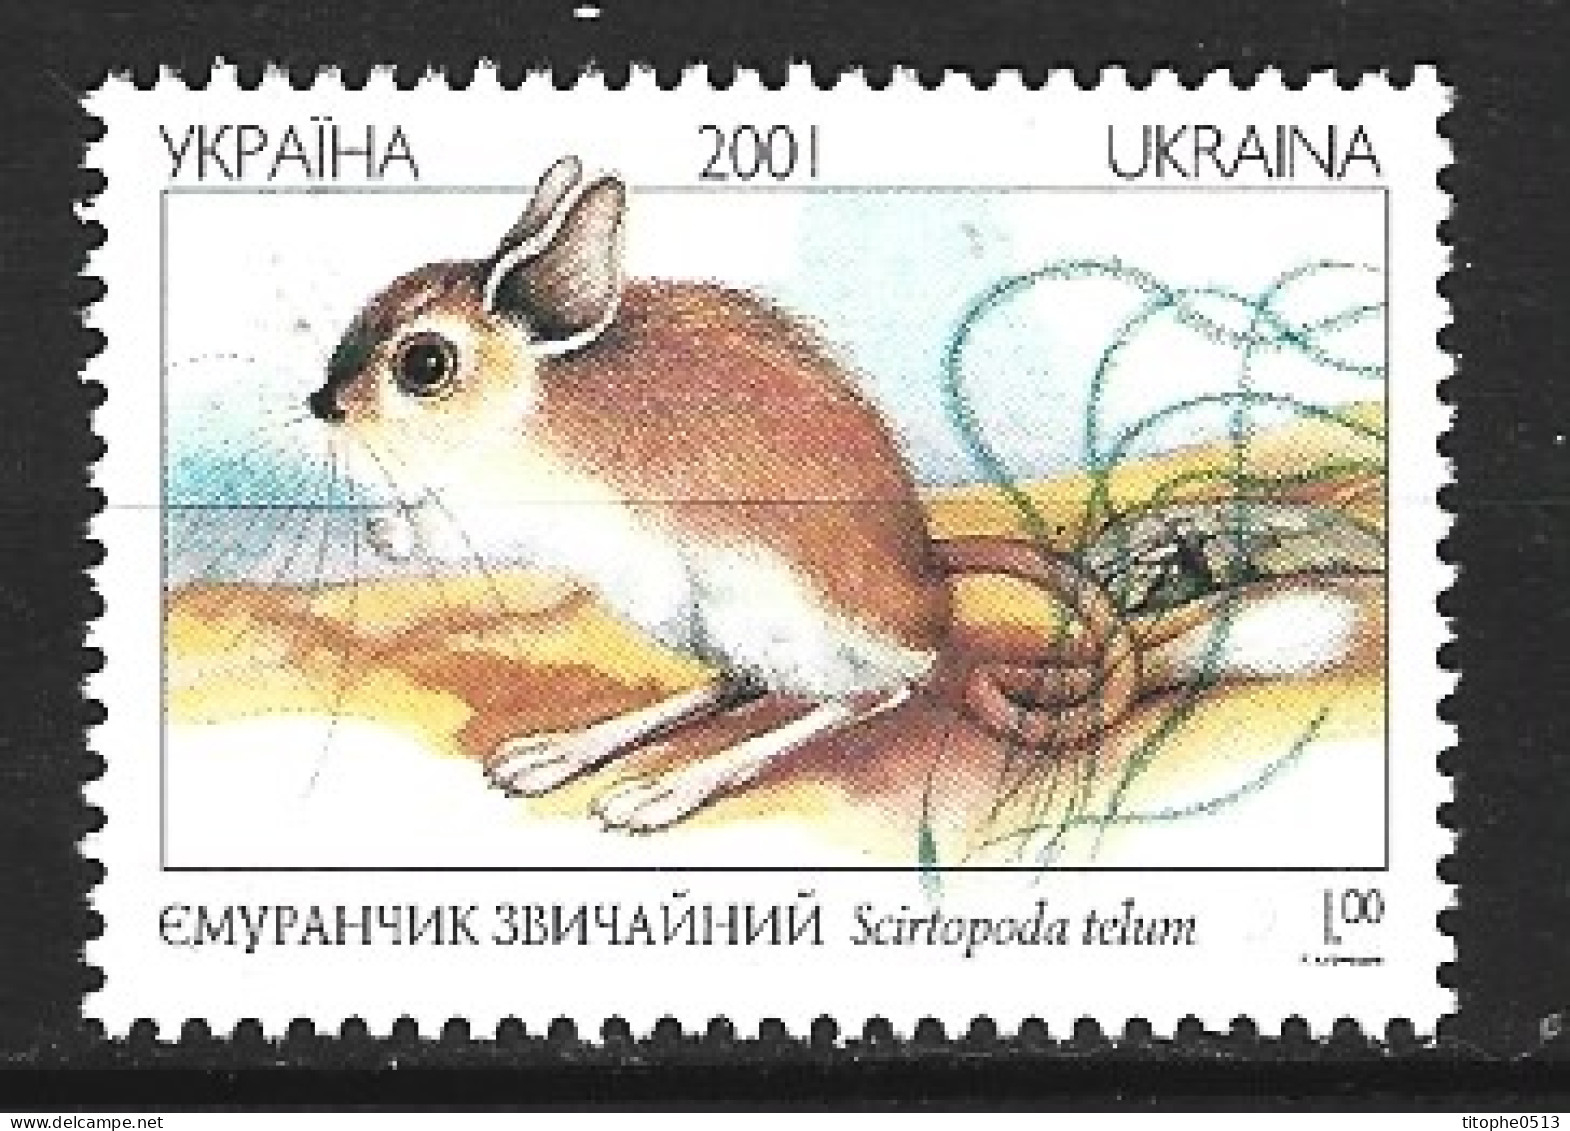 UKRAINE. N°431 De 2001. Gerboise. - Rodents